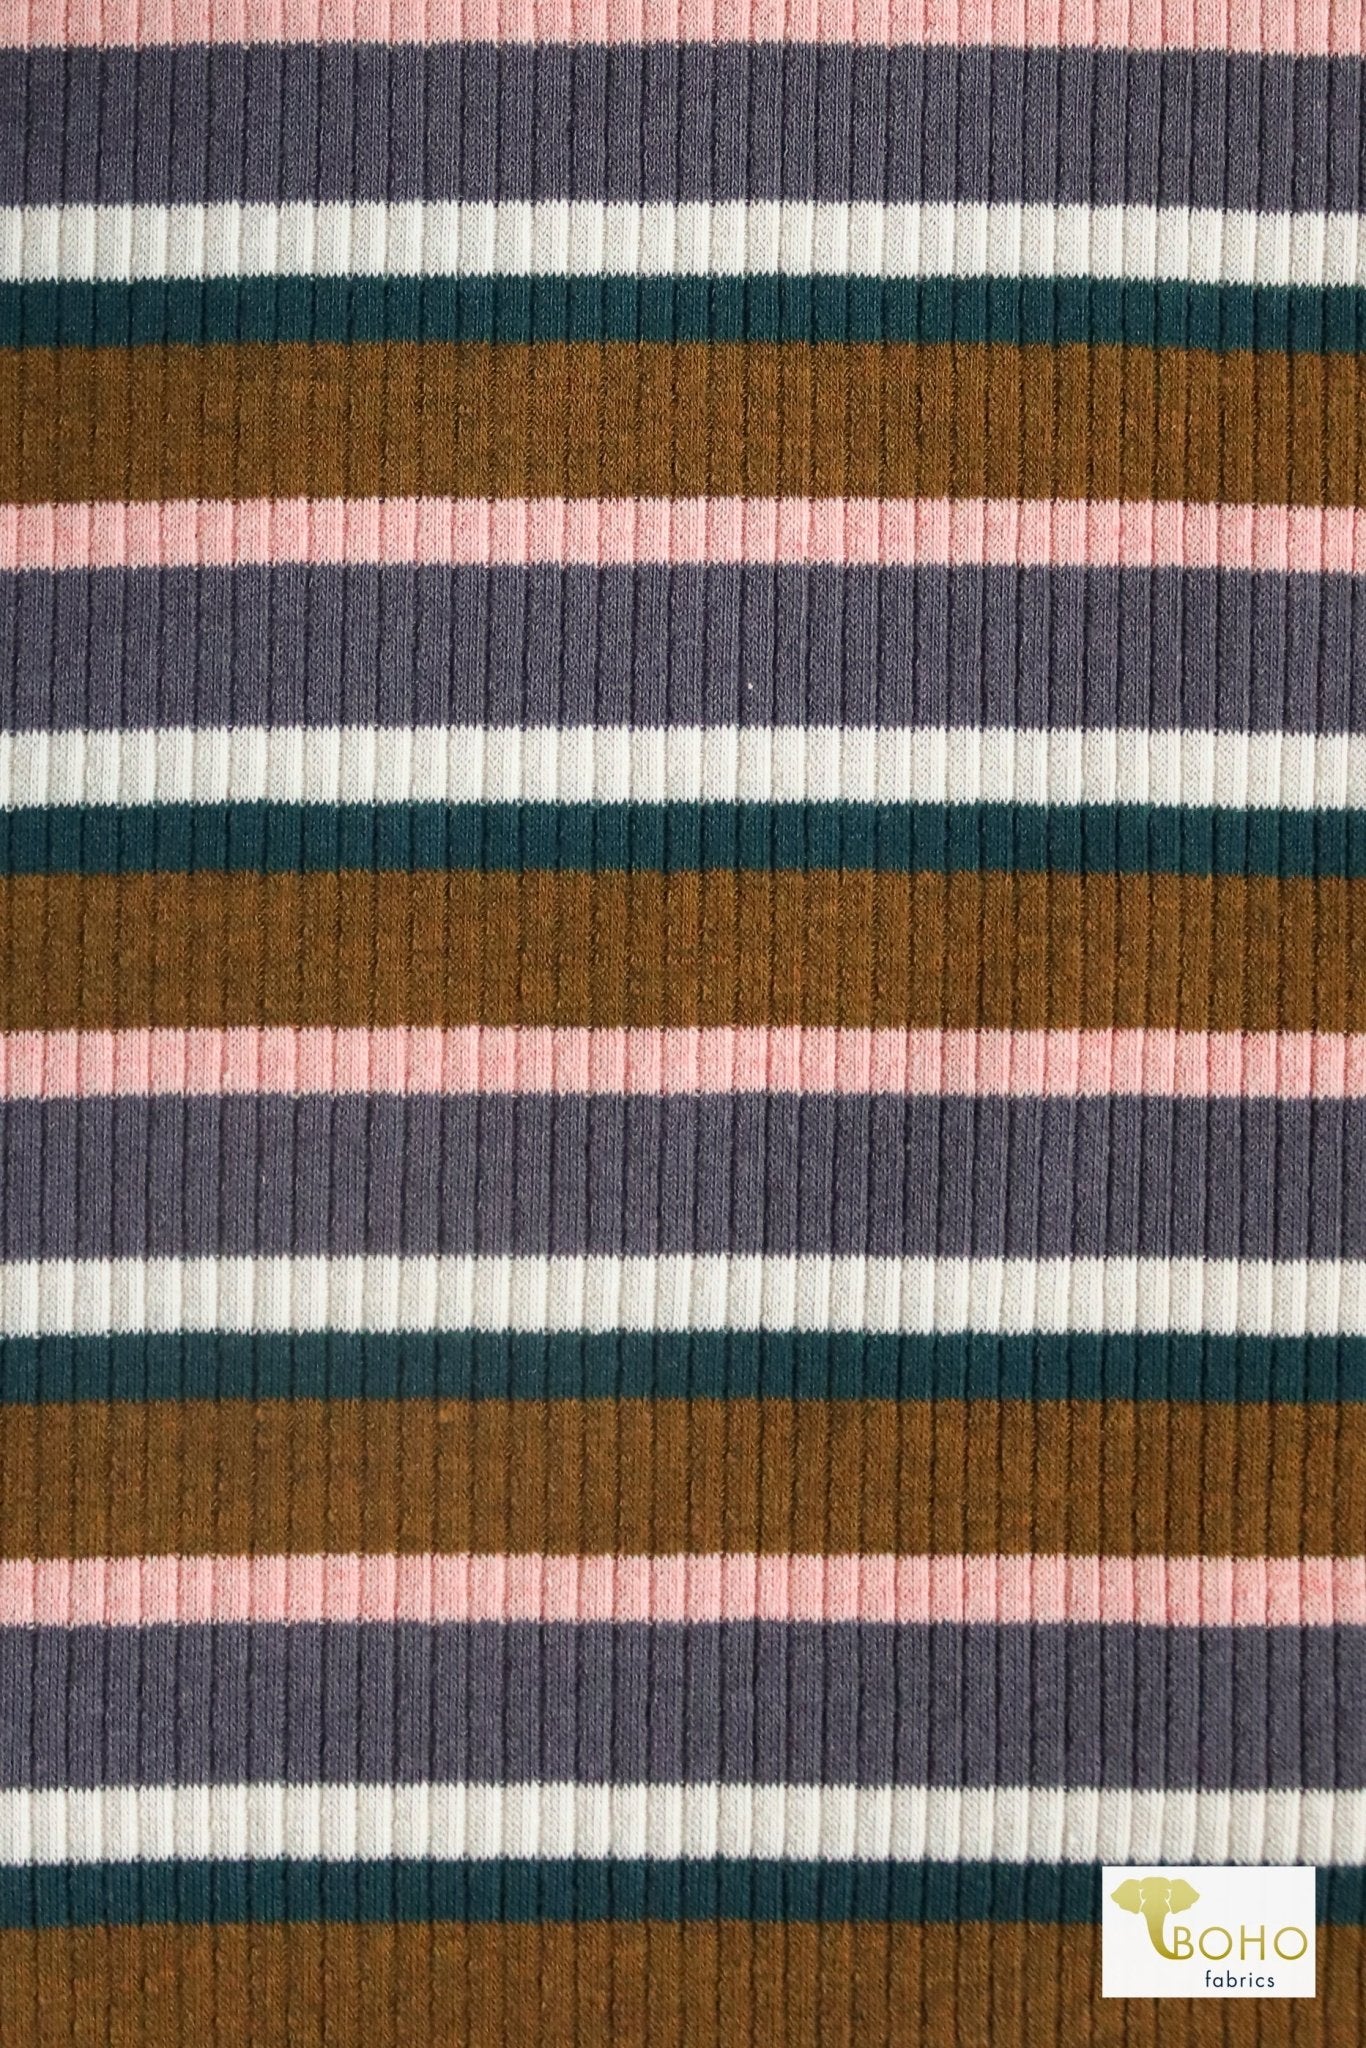 Aubrey Stripes, Rib Knit - Boho Fabrics